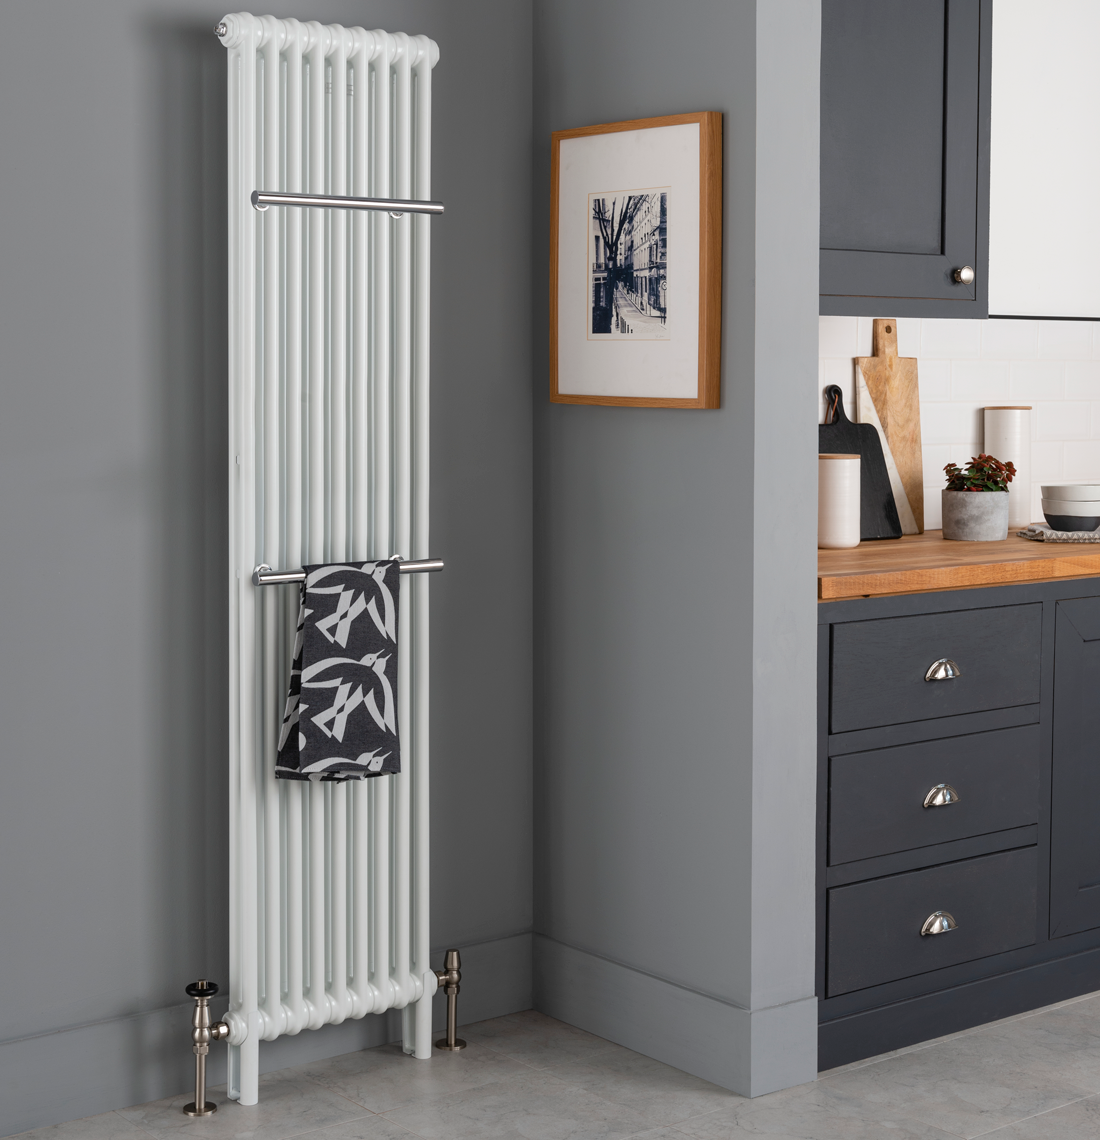 See our range of column radiators